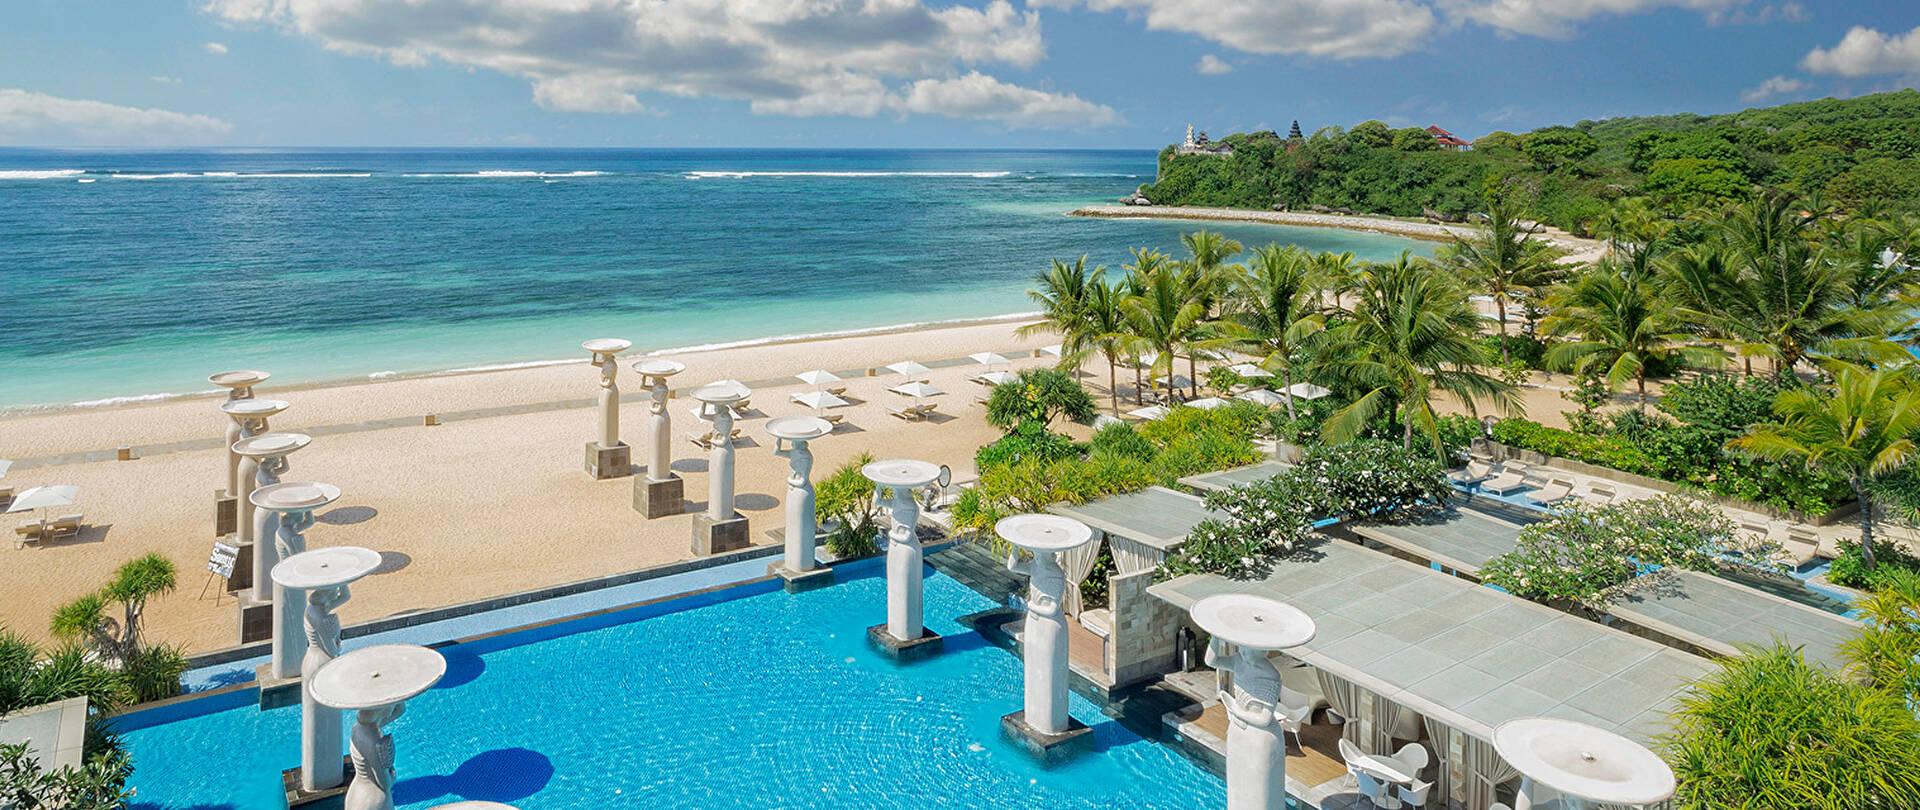 Lush in Luxury | The Mulia, Mulia Resort & Villas - Nusa Dua, Bali